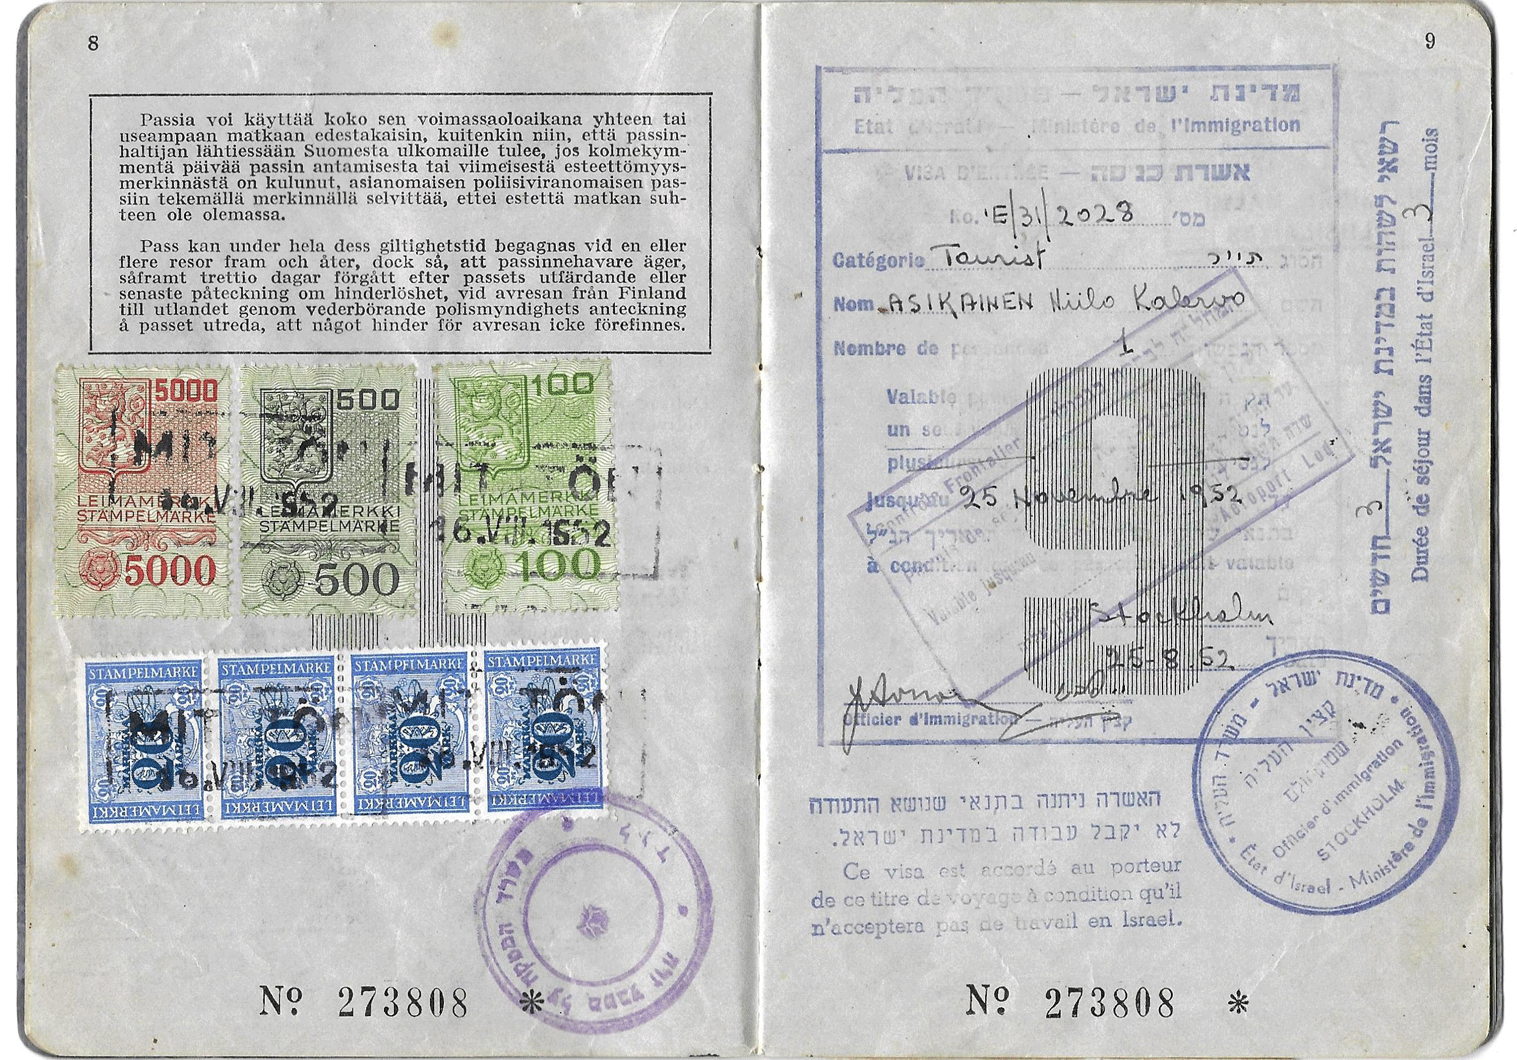 Finnish passport used for Israel.